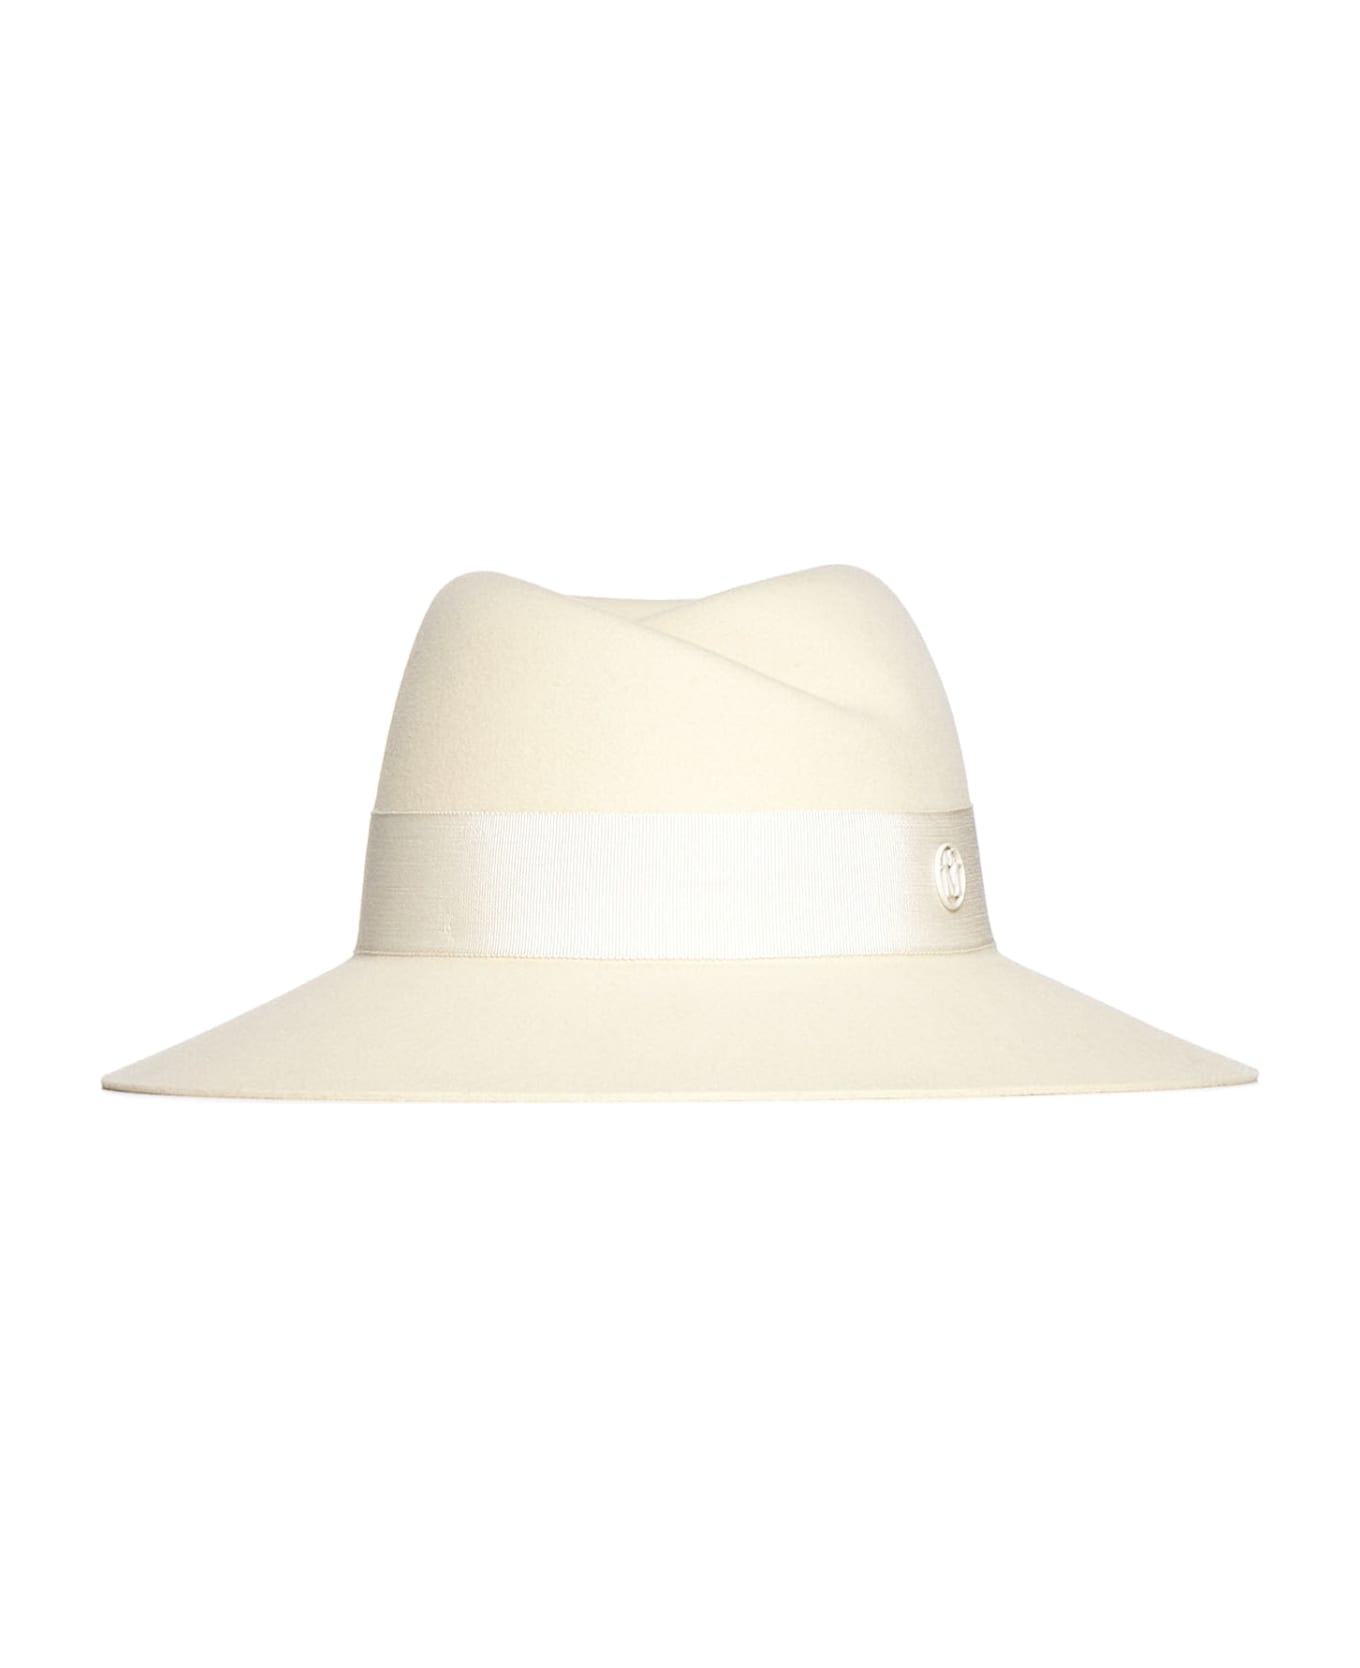 Maison Michel Hat - Seed pearl 帽子